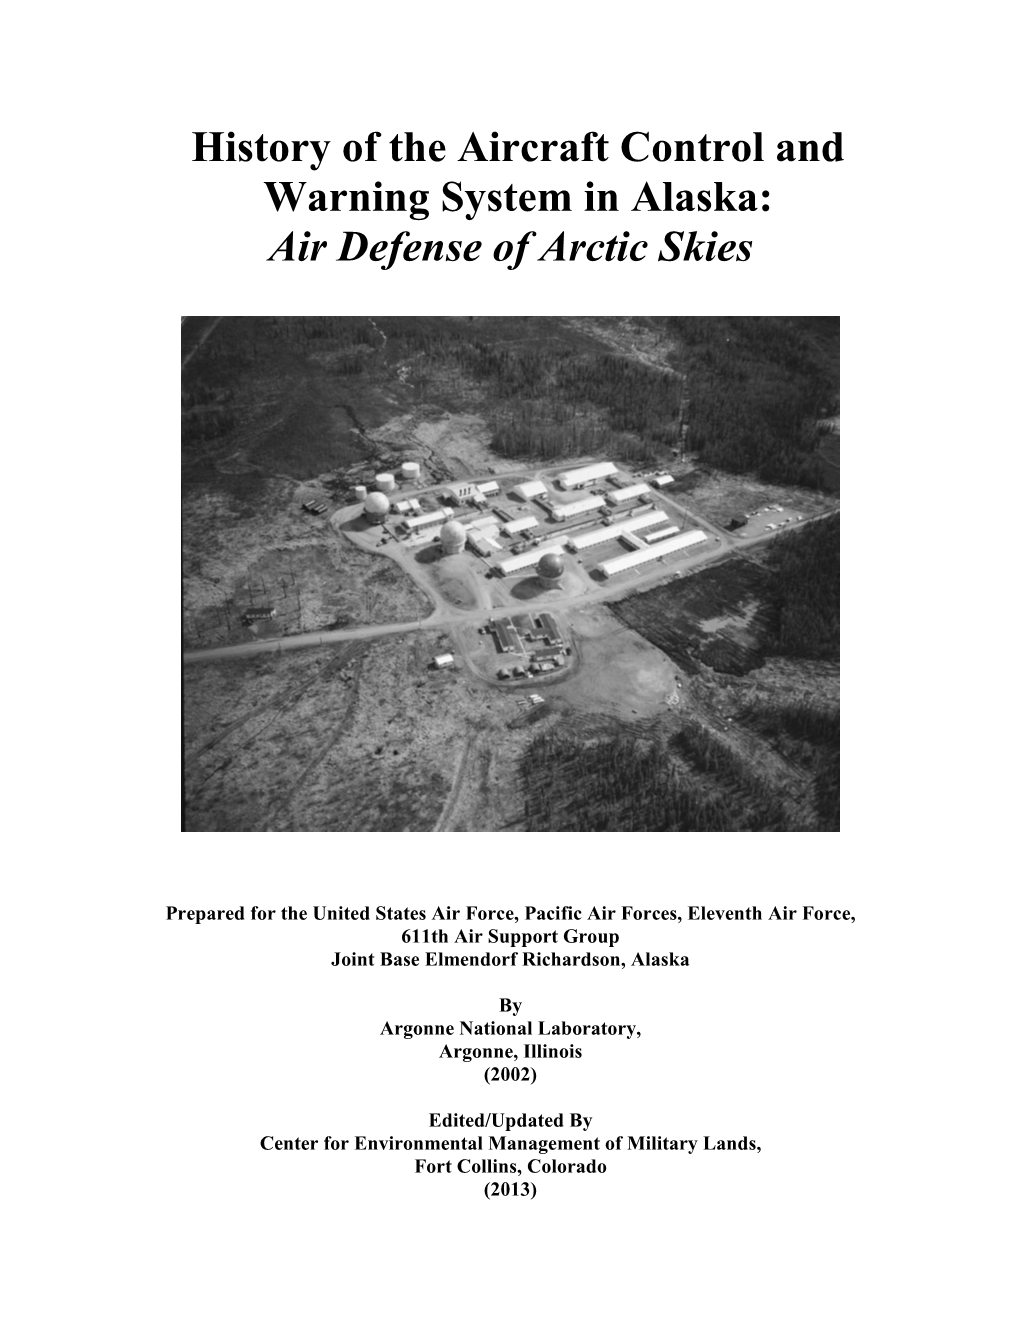 History of the Aircraft Control and Warning System in Alaska: Air Defense of Arctic Skies